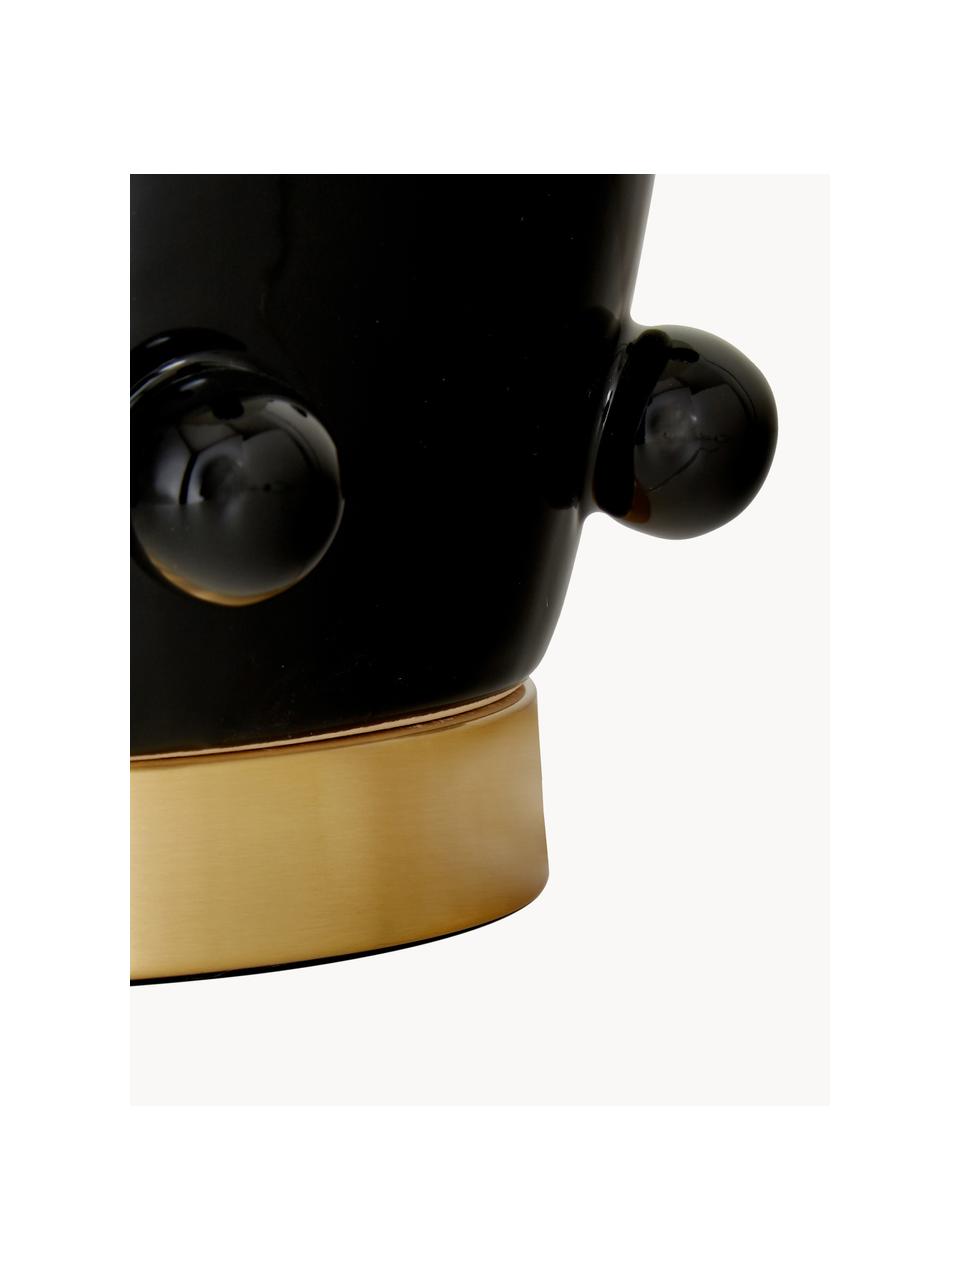 Grosse Keramik-Tischlampe Leandra, Lampenschirm: Textil, Sockel: Metall, vermessingt, Schwarz, Weiss, Goldfarben, Ø 36 x H 57 cm